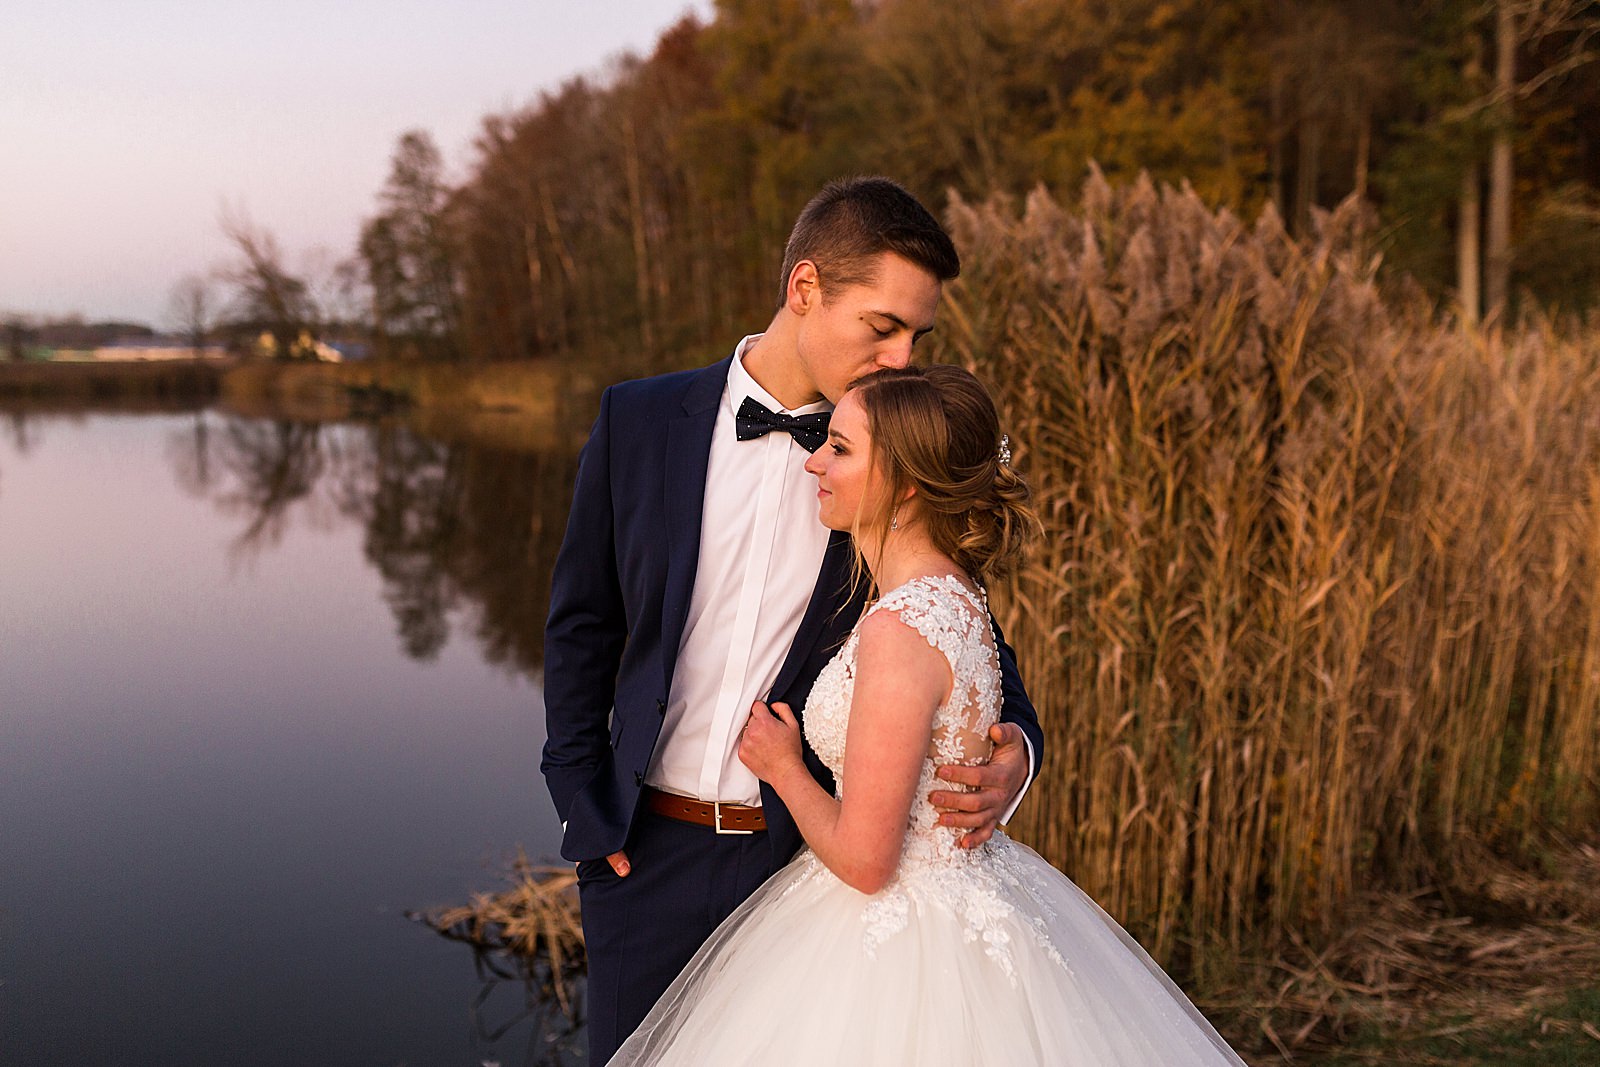 Romantisches After-Wedding-Shooting im Herbst am Degenbachsee in Crailsheim